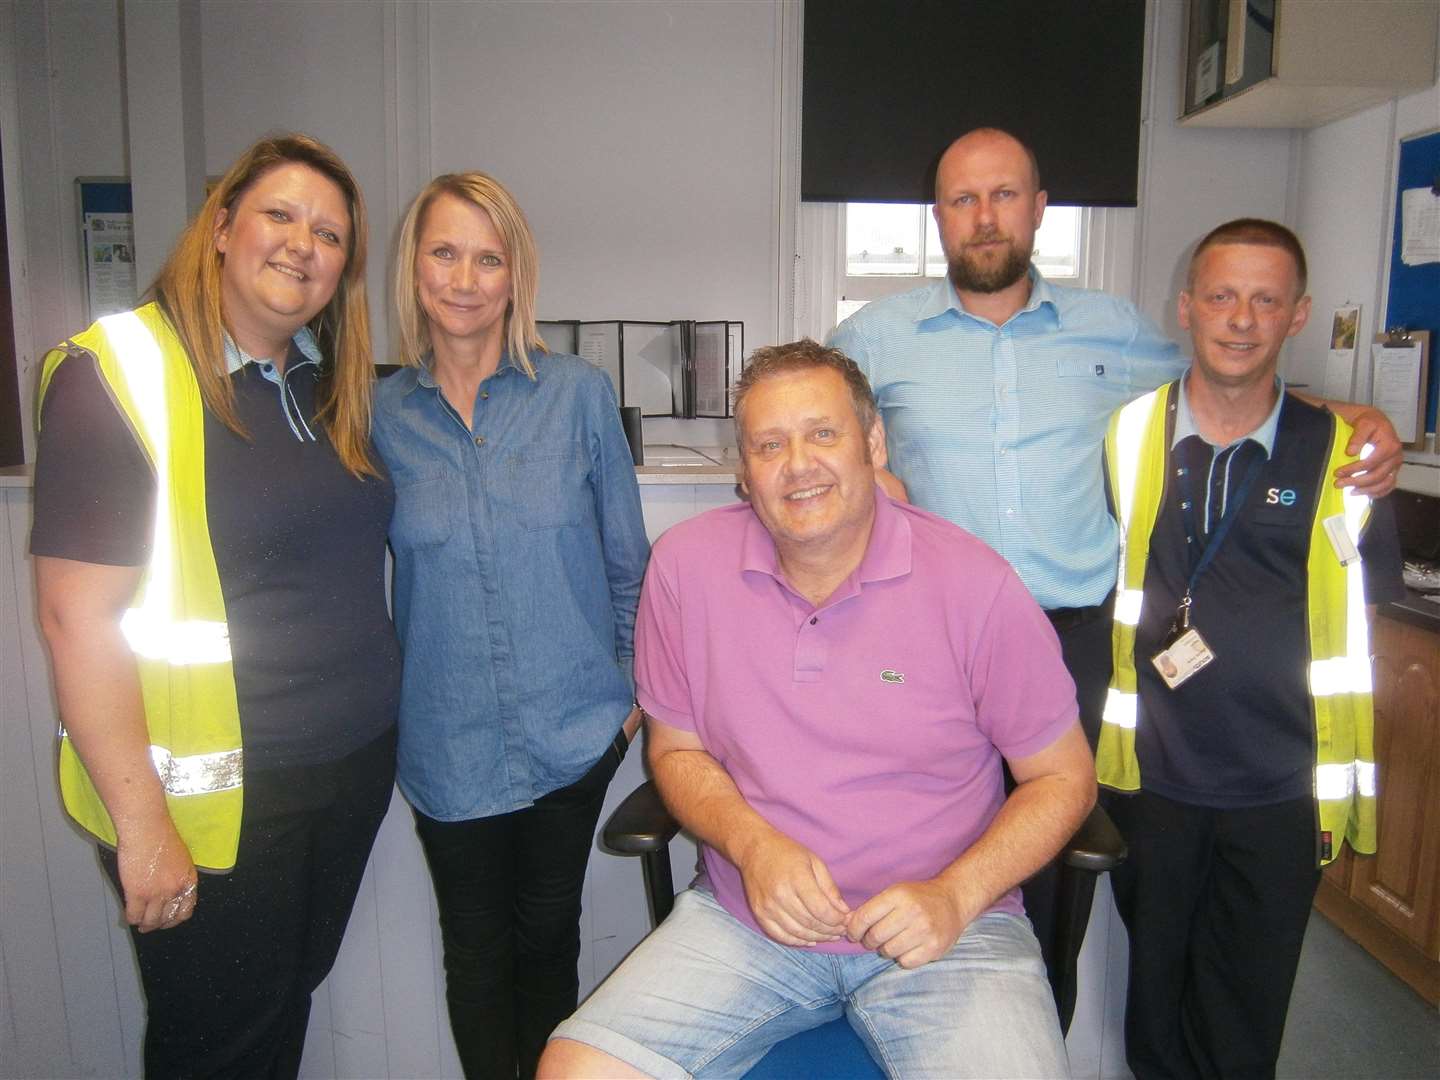 Stuart Legg and partner Natalie Bresler with Southeastern colleagues at Maidstone East station (4328395)